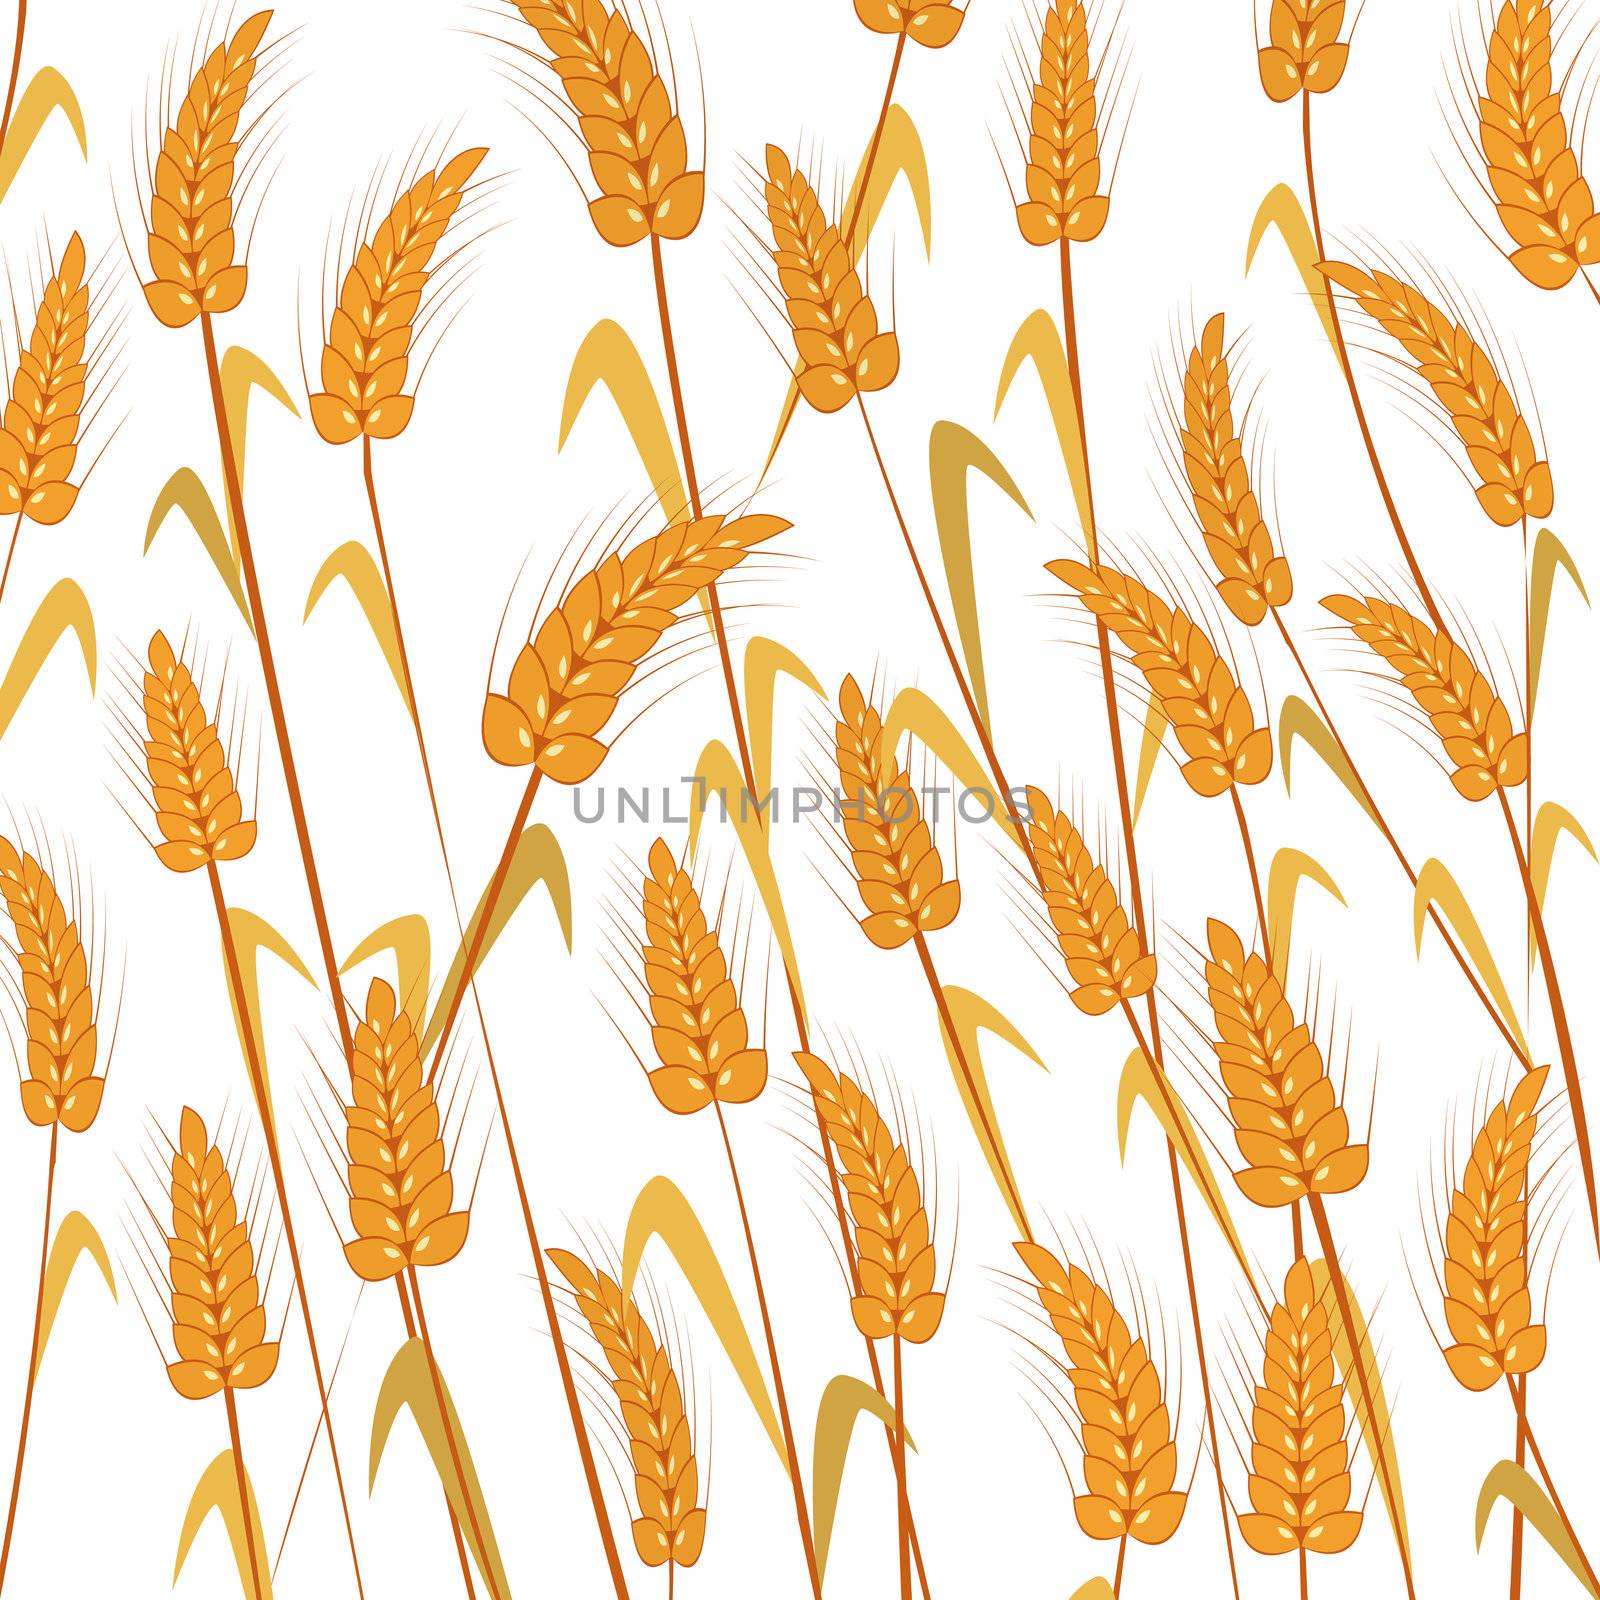 Wheat background by Lirch